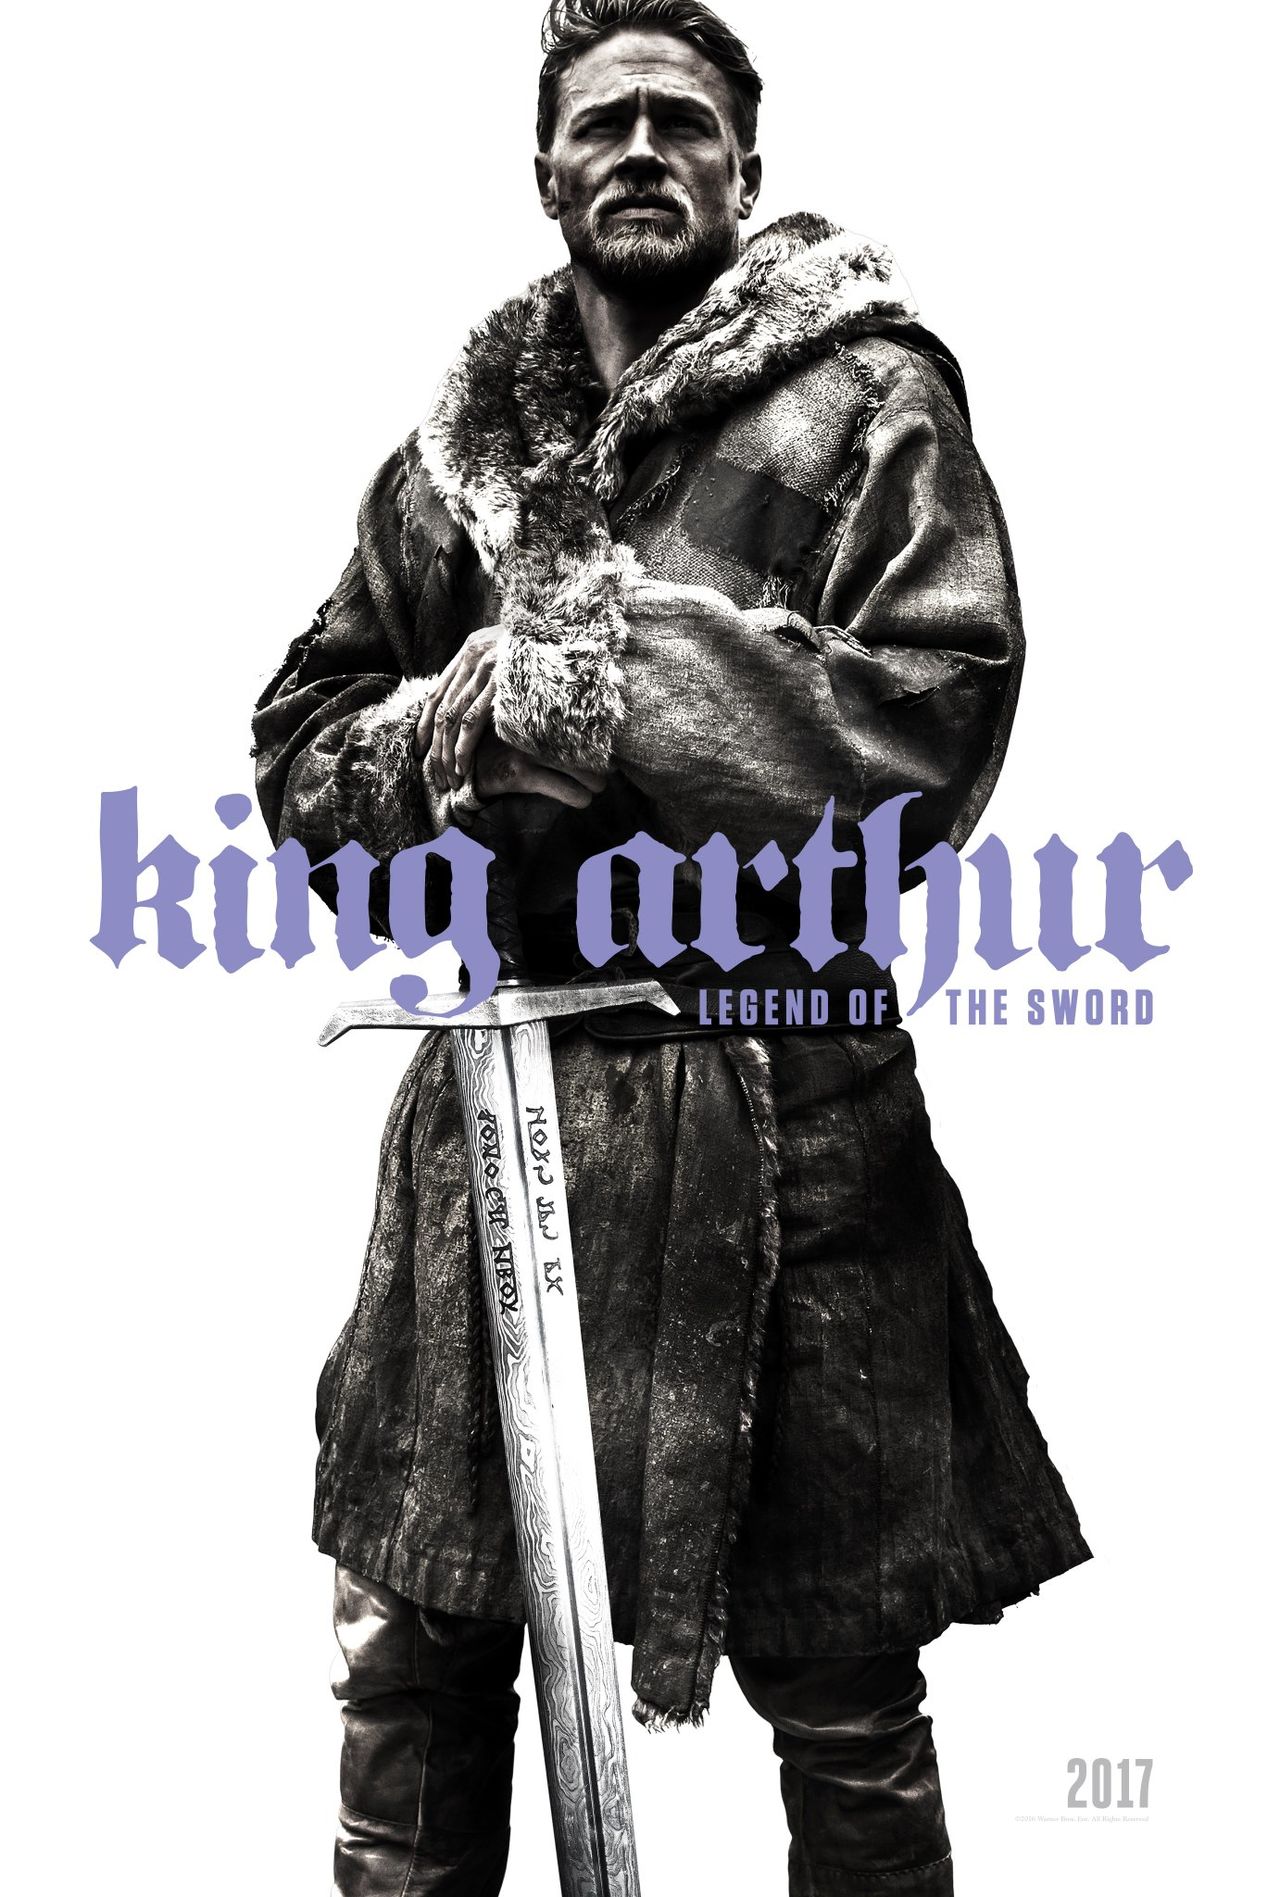 Hd Online Movie 2017 King Arthur Legend Of The Sword Watch boxnews